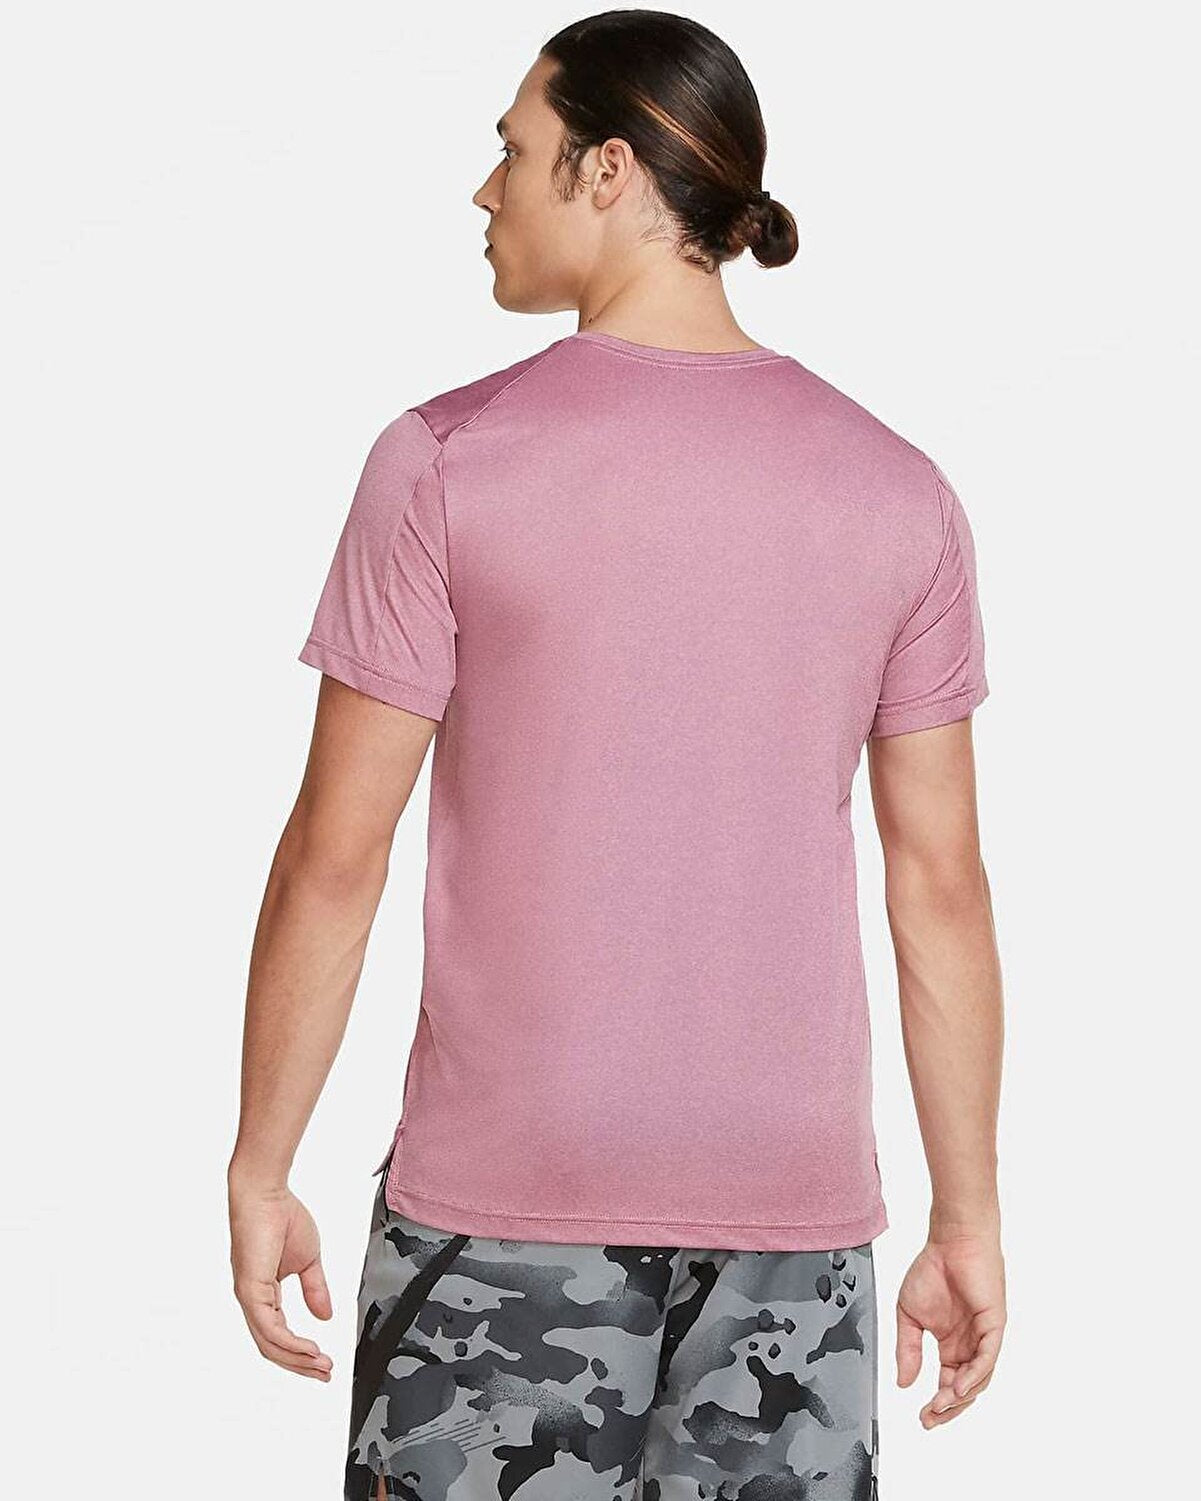 Nike Ss Dry T-shirt Men